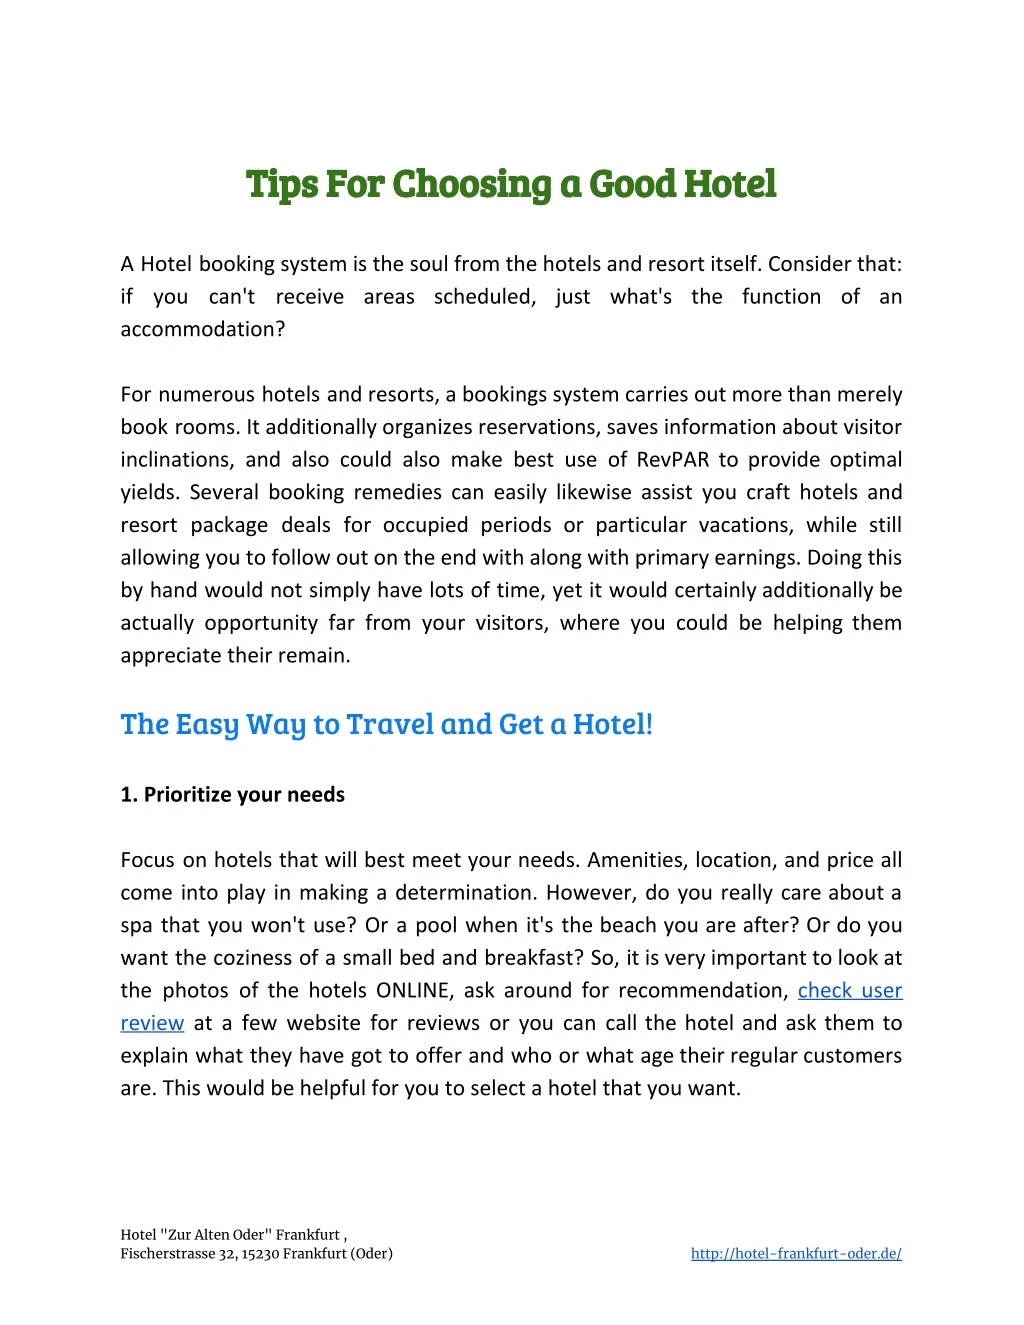 tips for choosing a good hotel tips for choosing